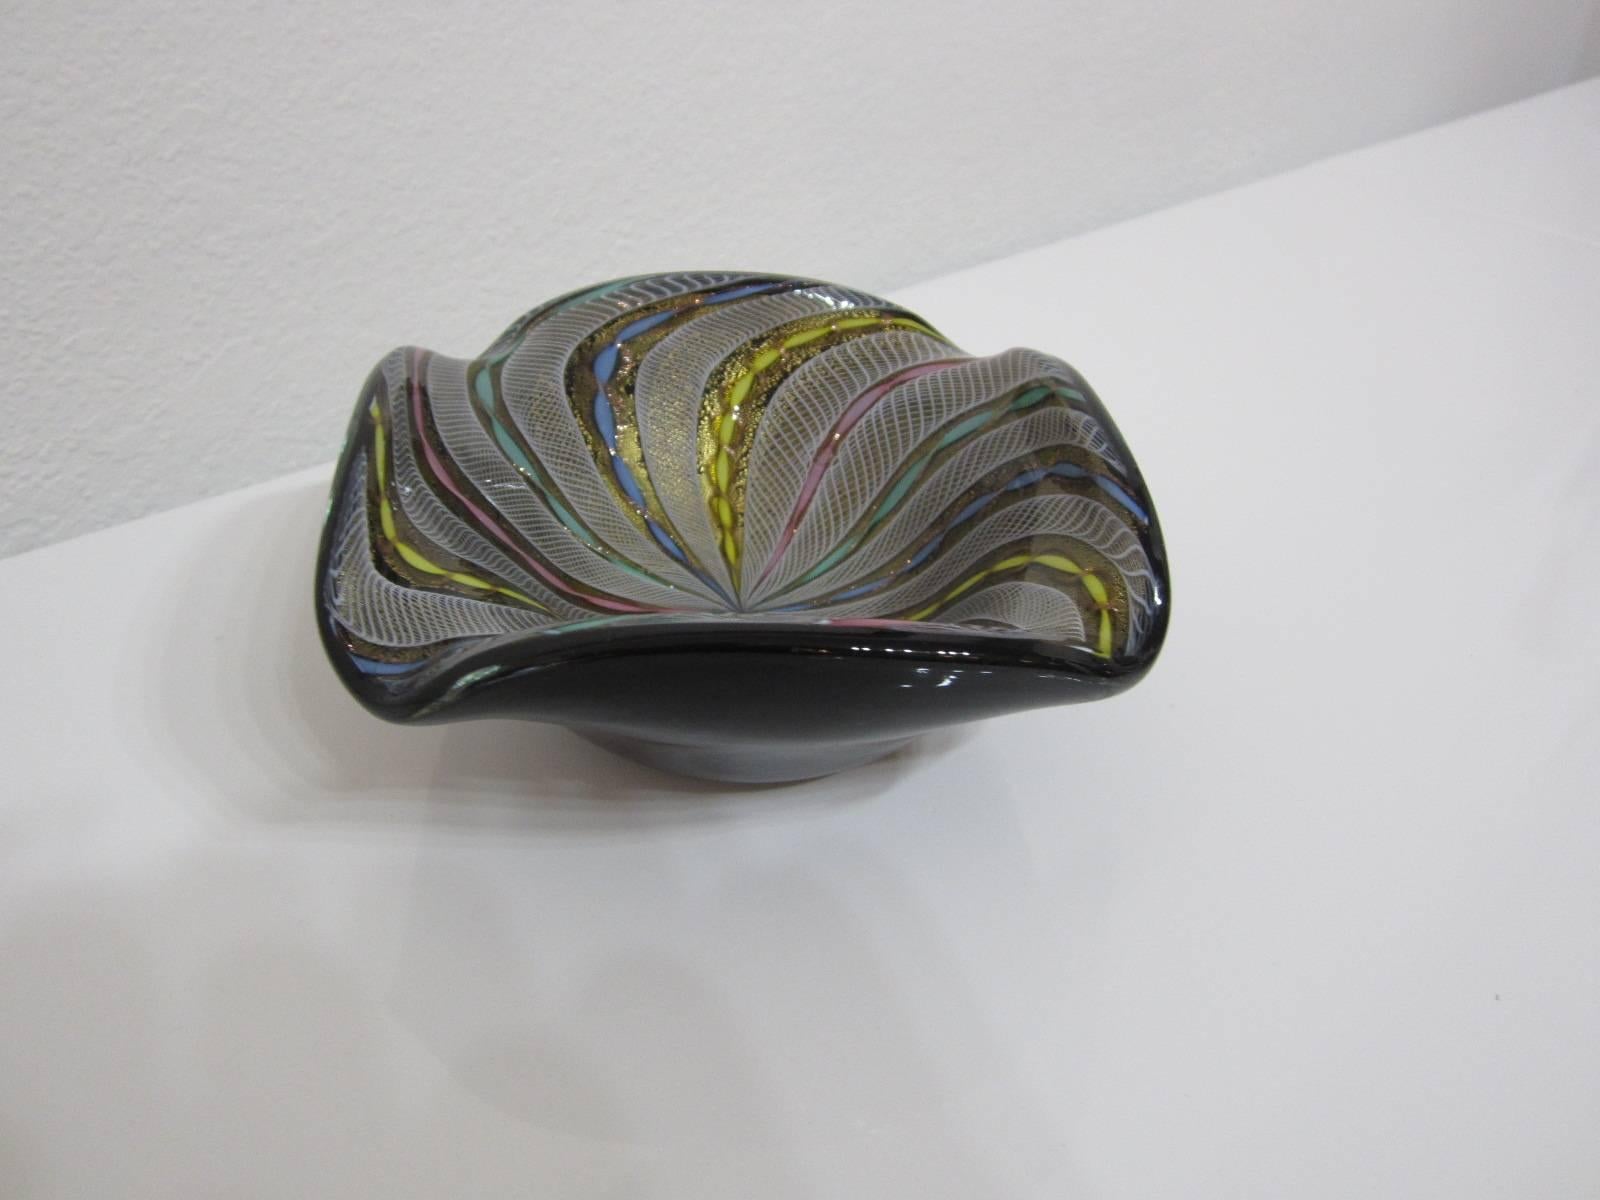 Handblown Murano glass bowl with beautiful, colorful latticino swirl interior pattern on black background glass.